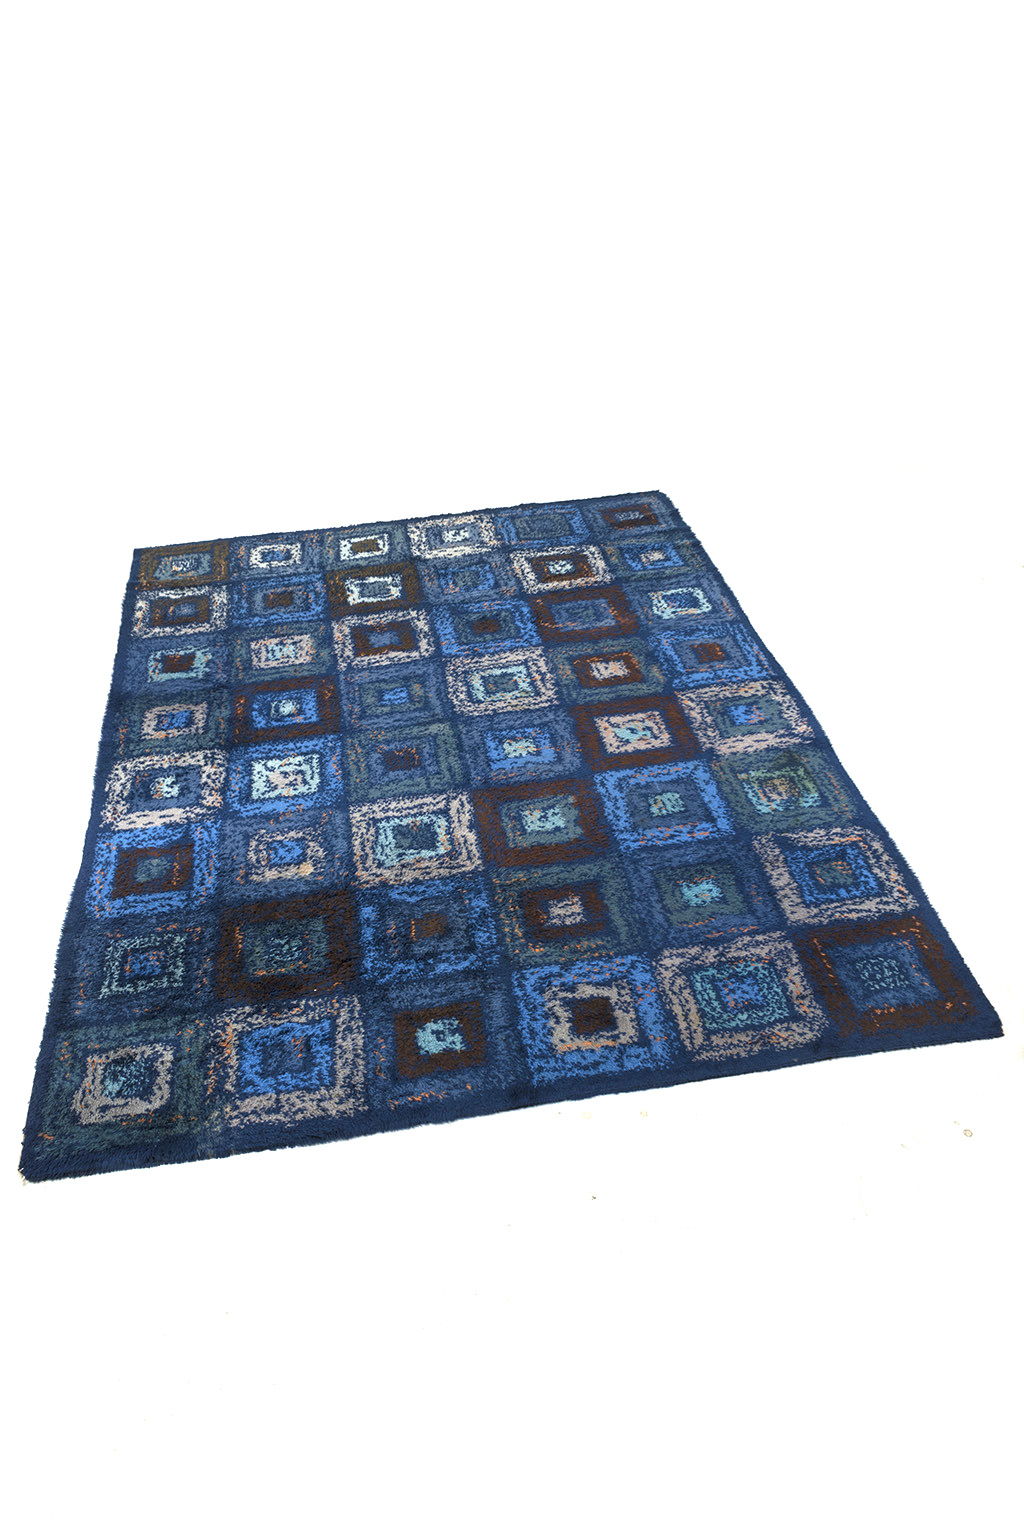 Large blue carpet